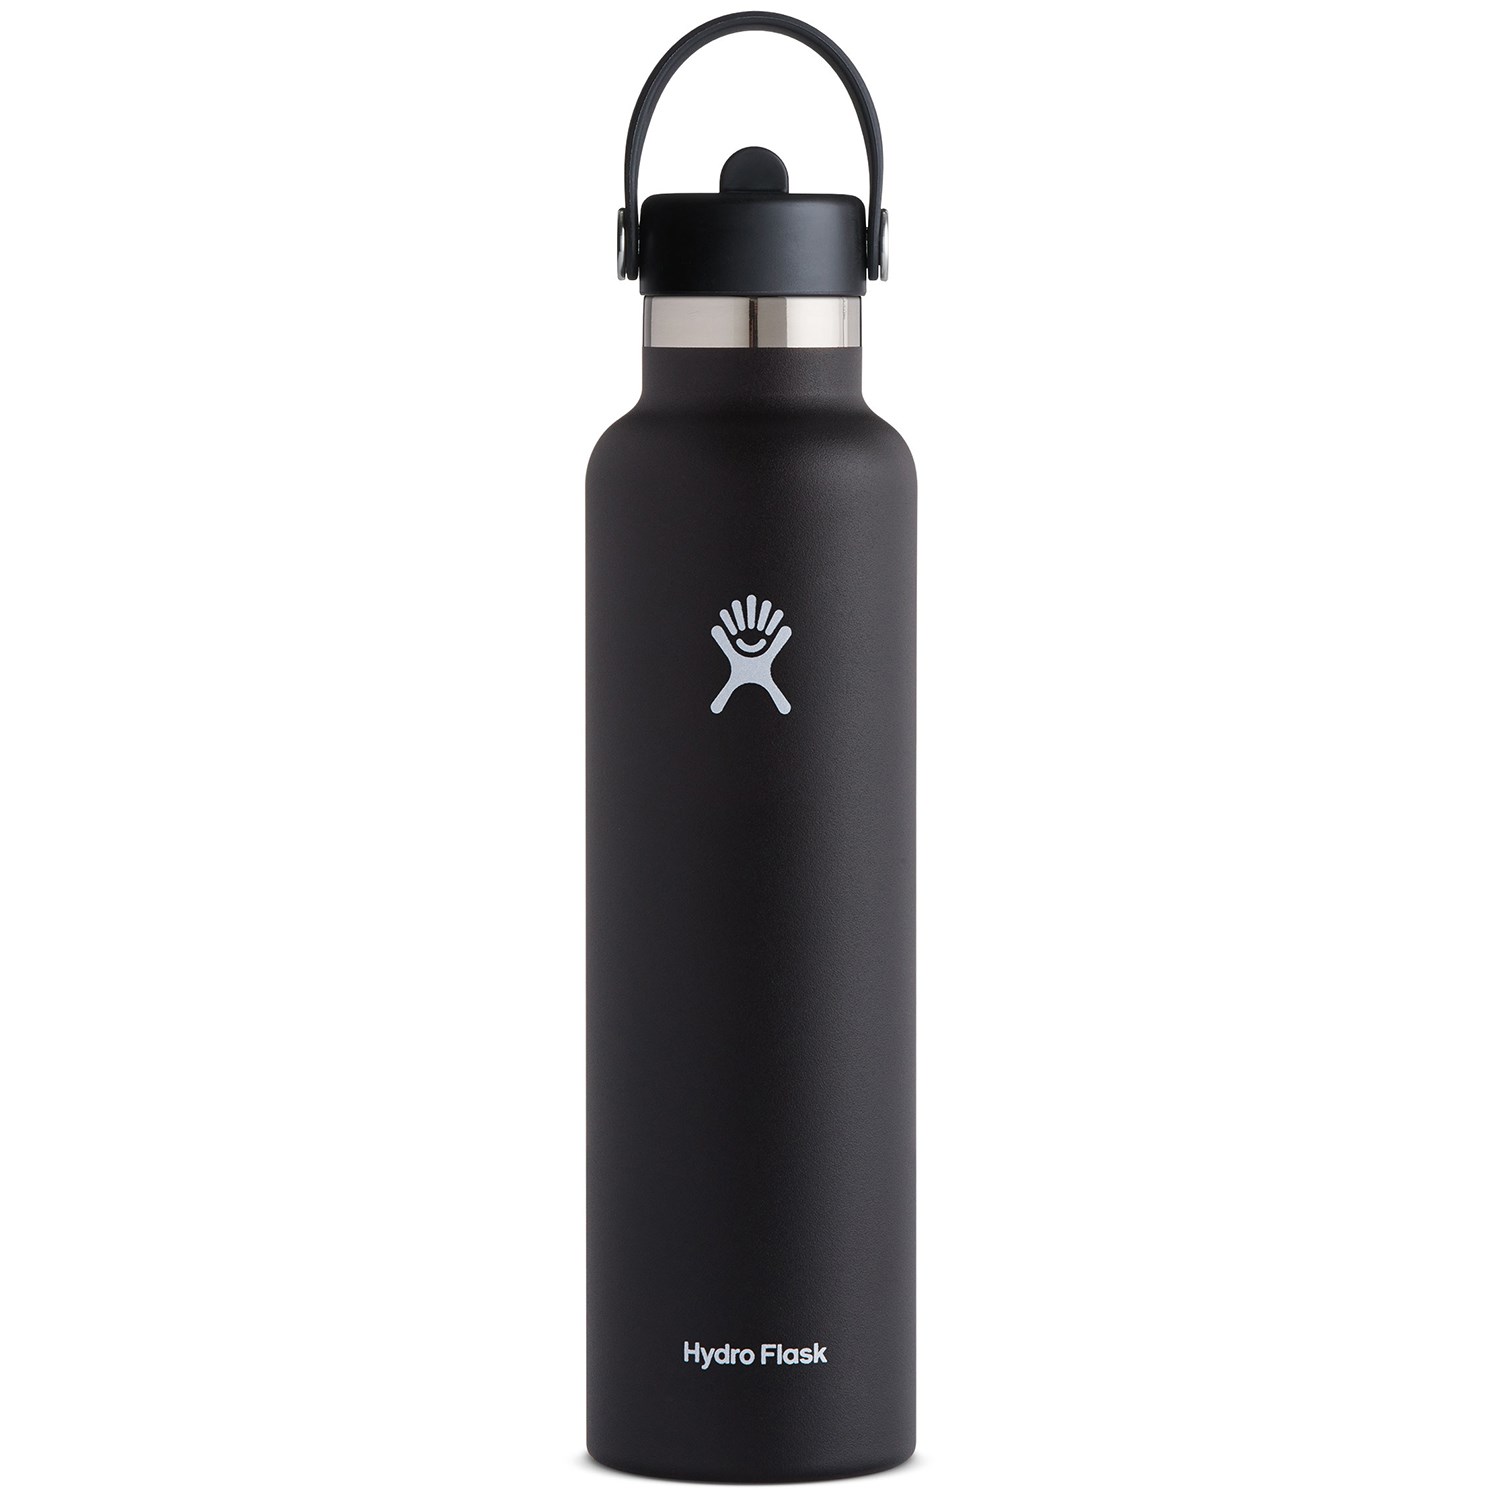 Hydro Flask 24 oz. Standard Mouth Bottle with Flex Straw